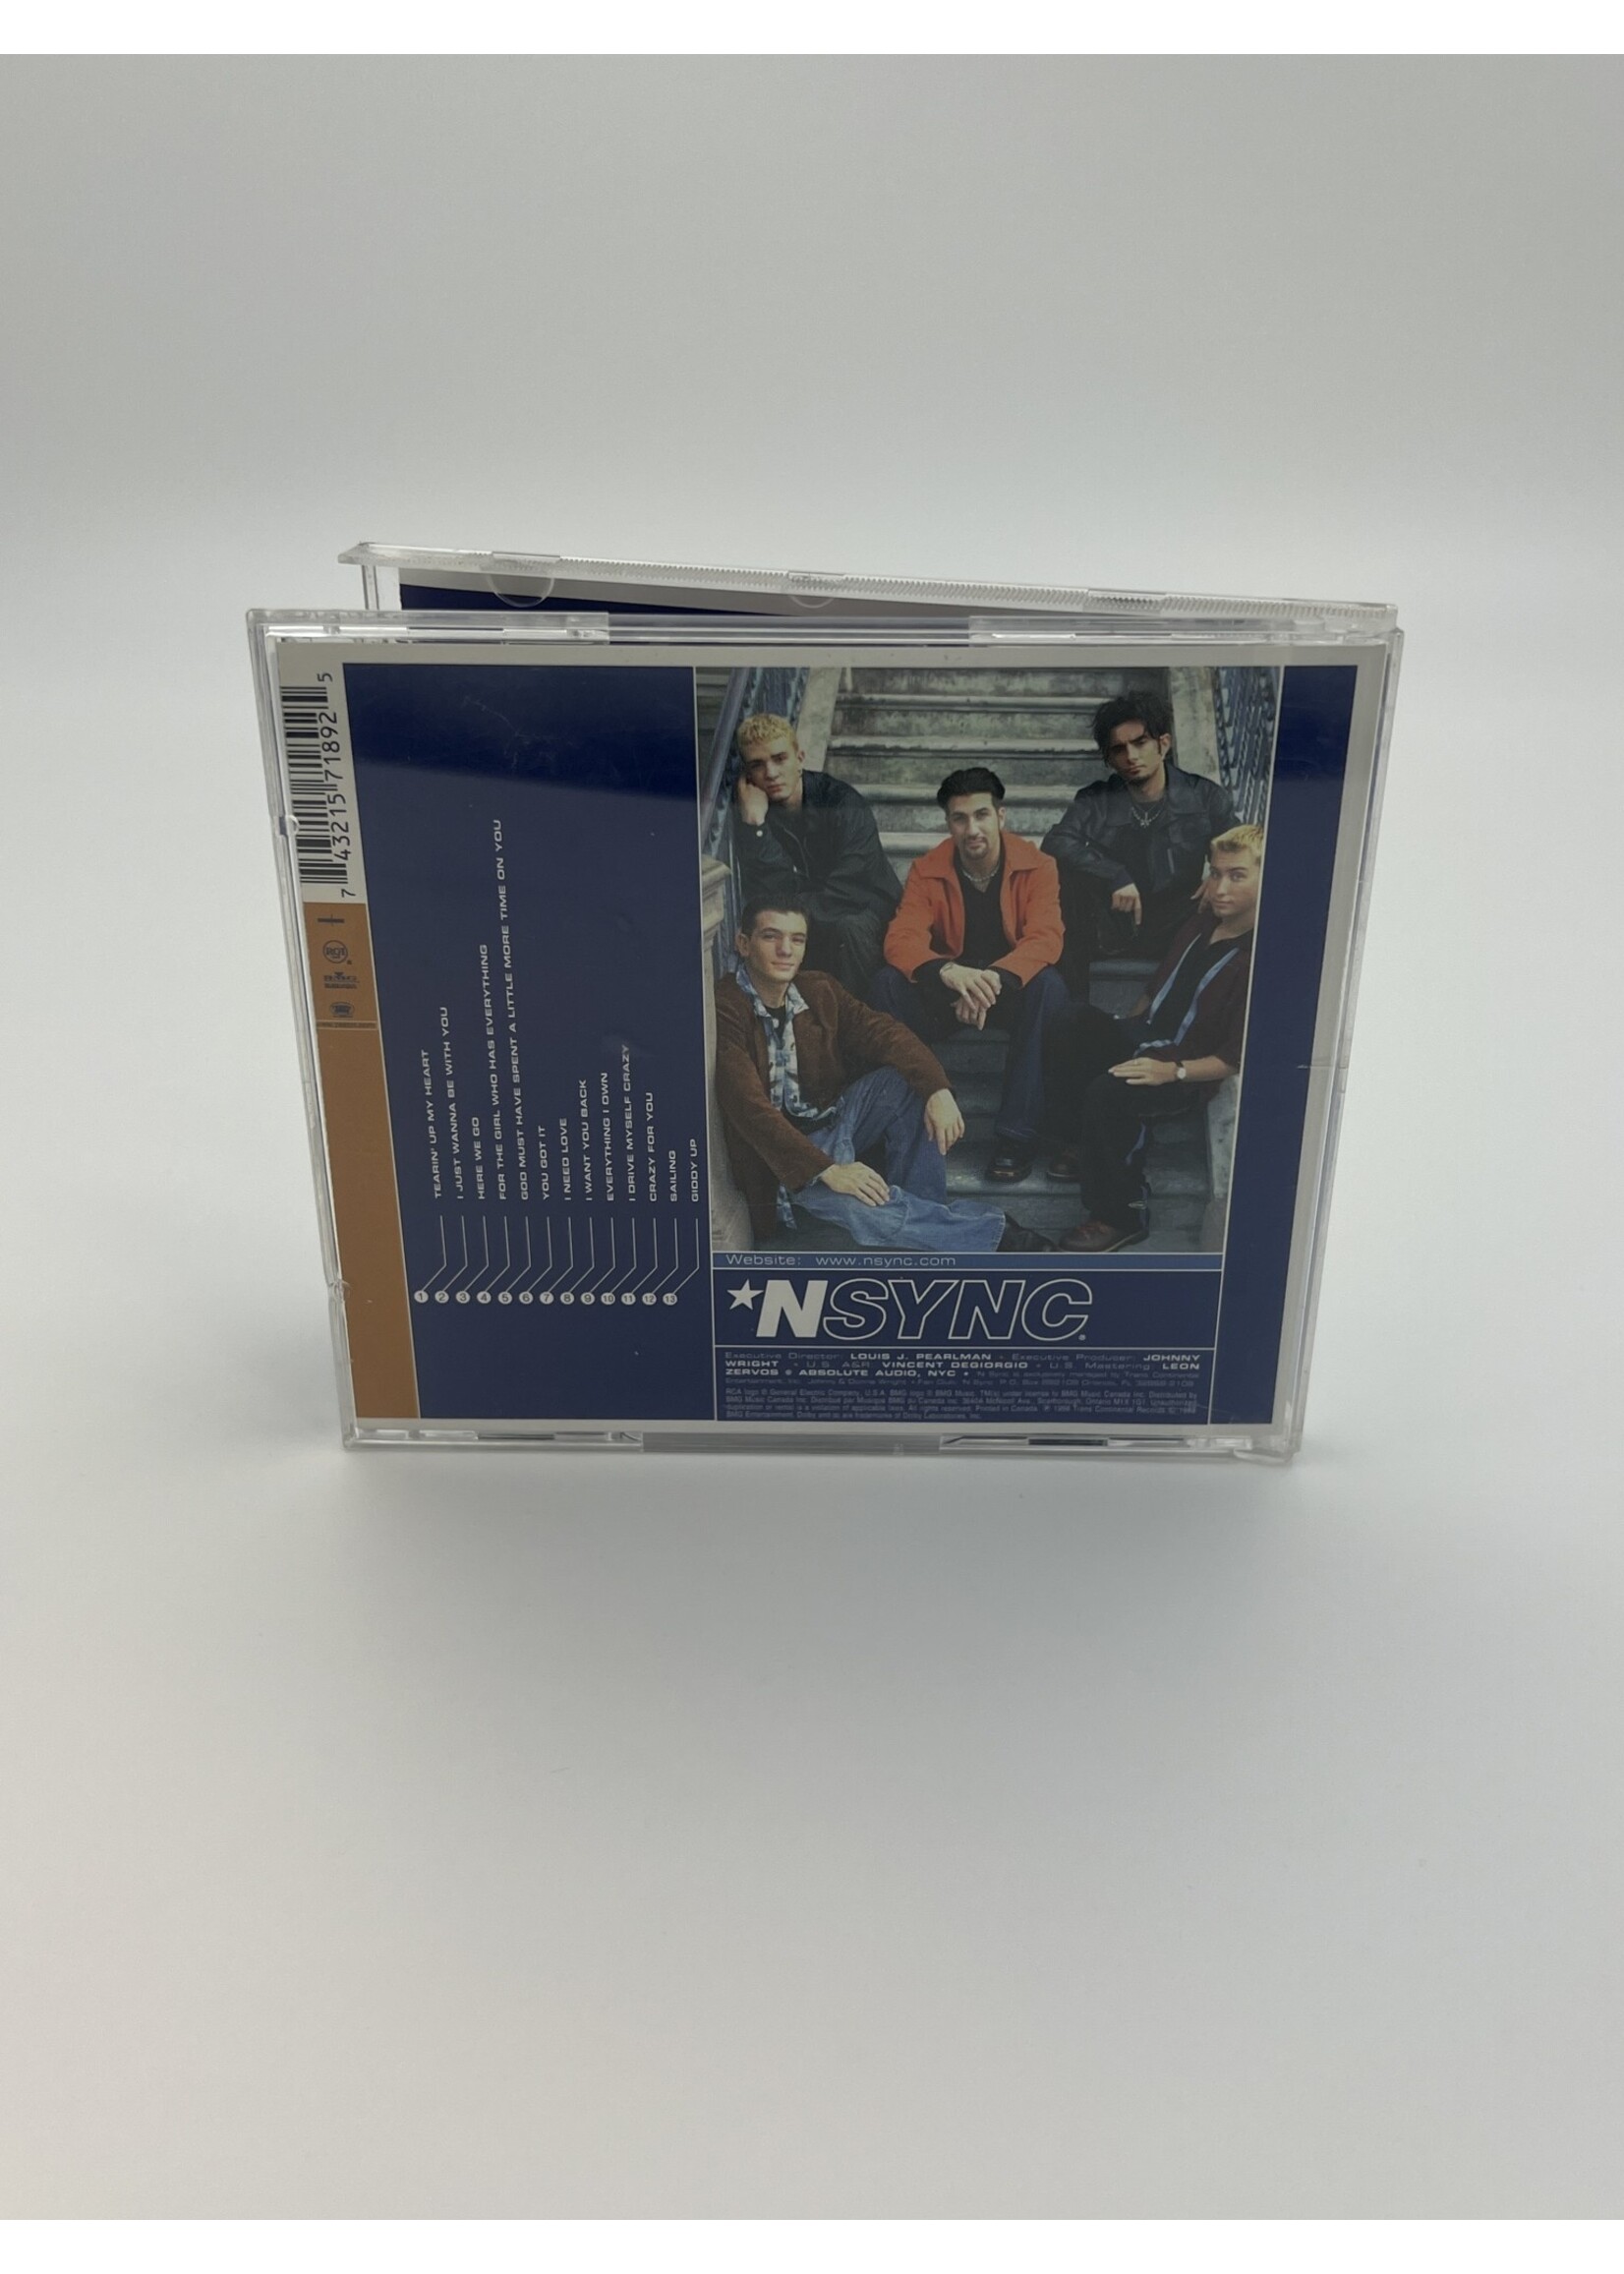 CD NSYNC Nsync CD